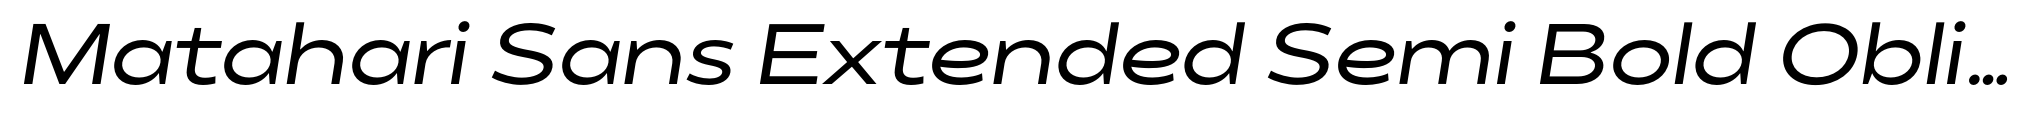 Matahari Sans Extended Semi Bold Oblique image